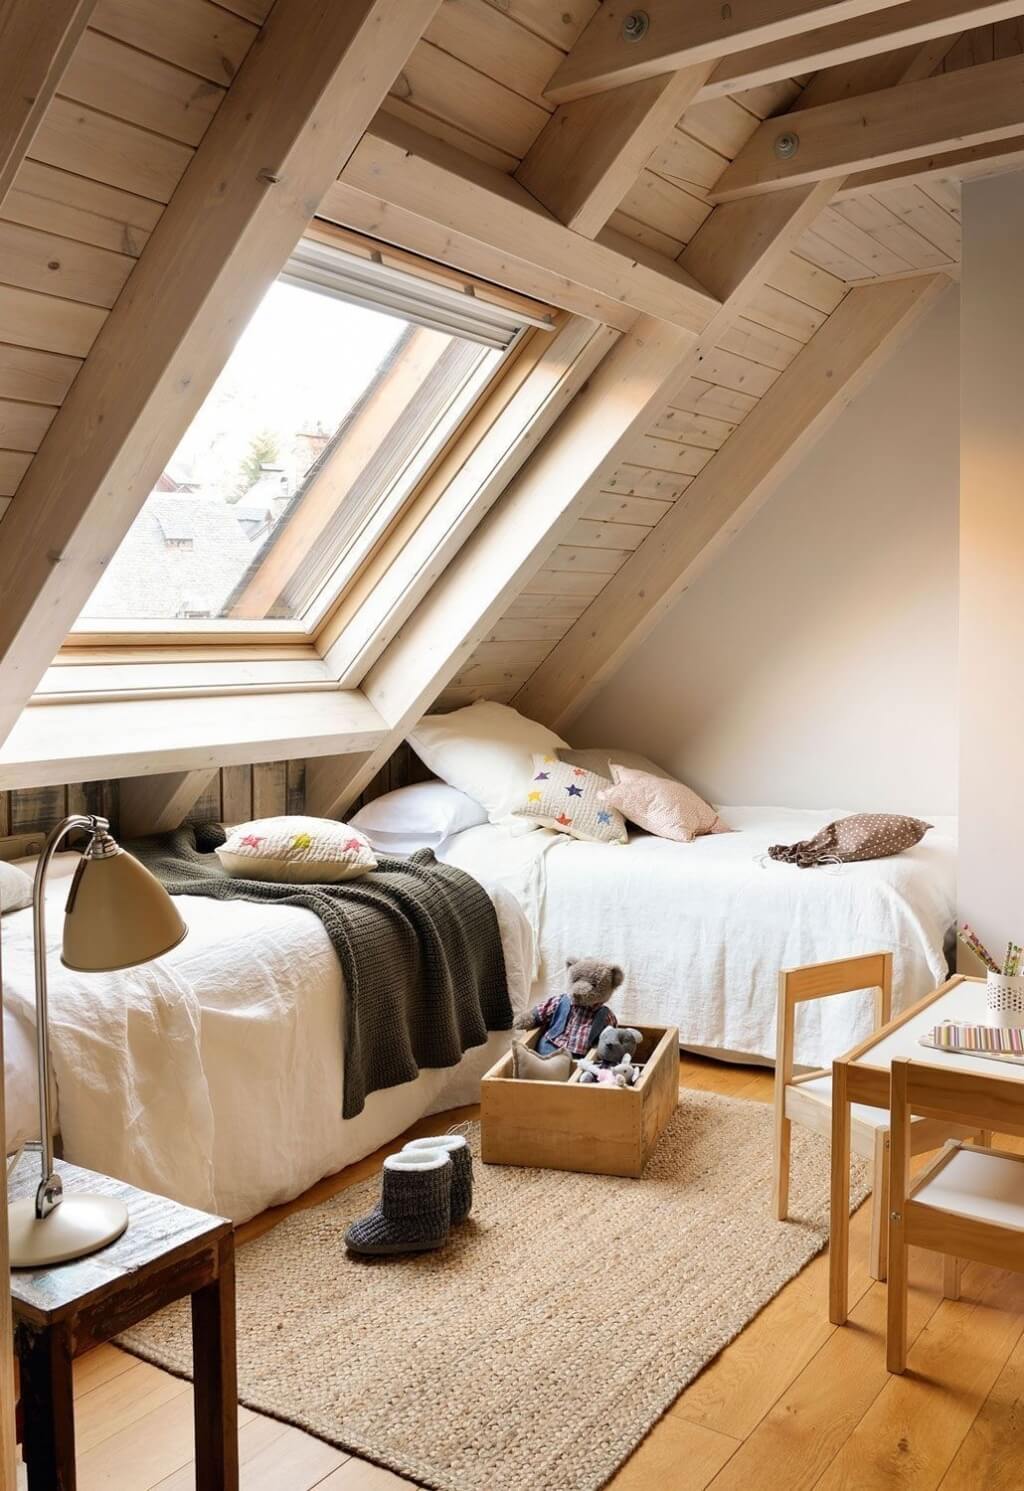 Cozy shared bedroom